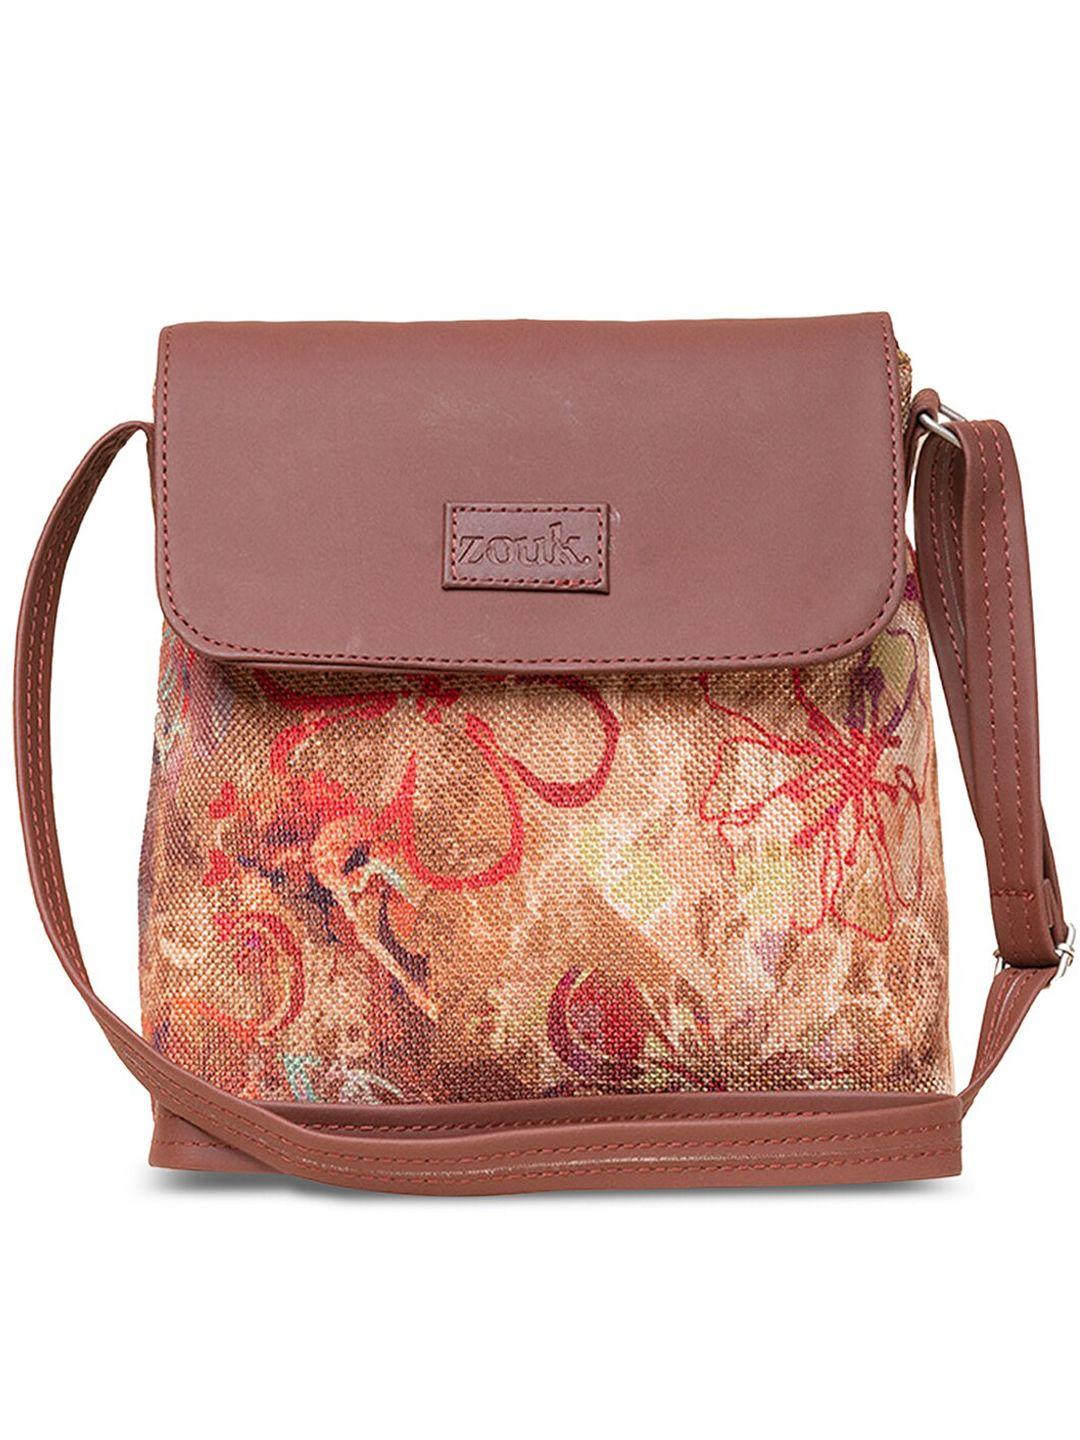 zouk floral printed structured sling bag